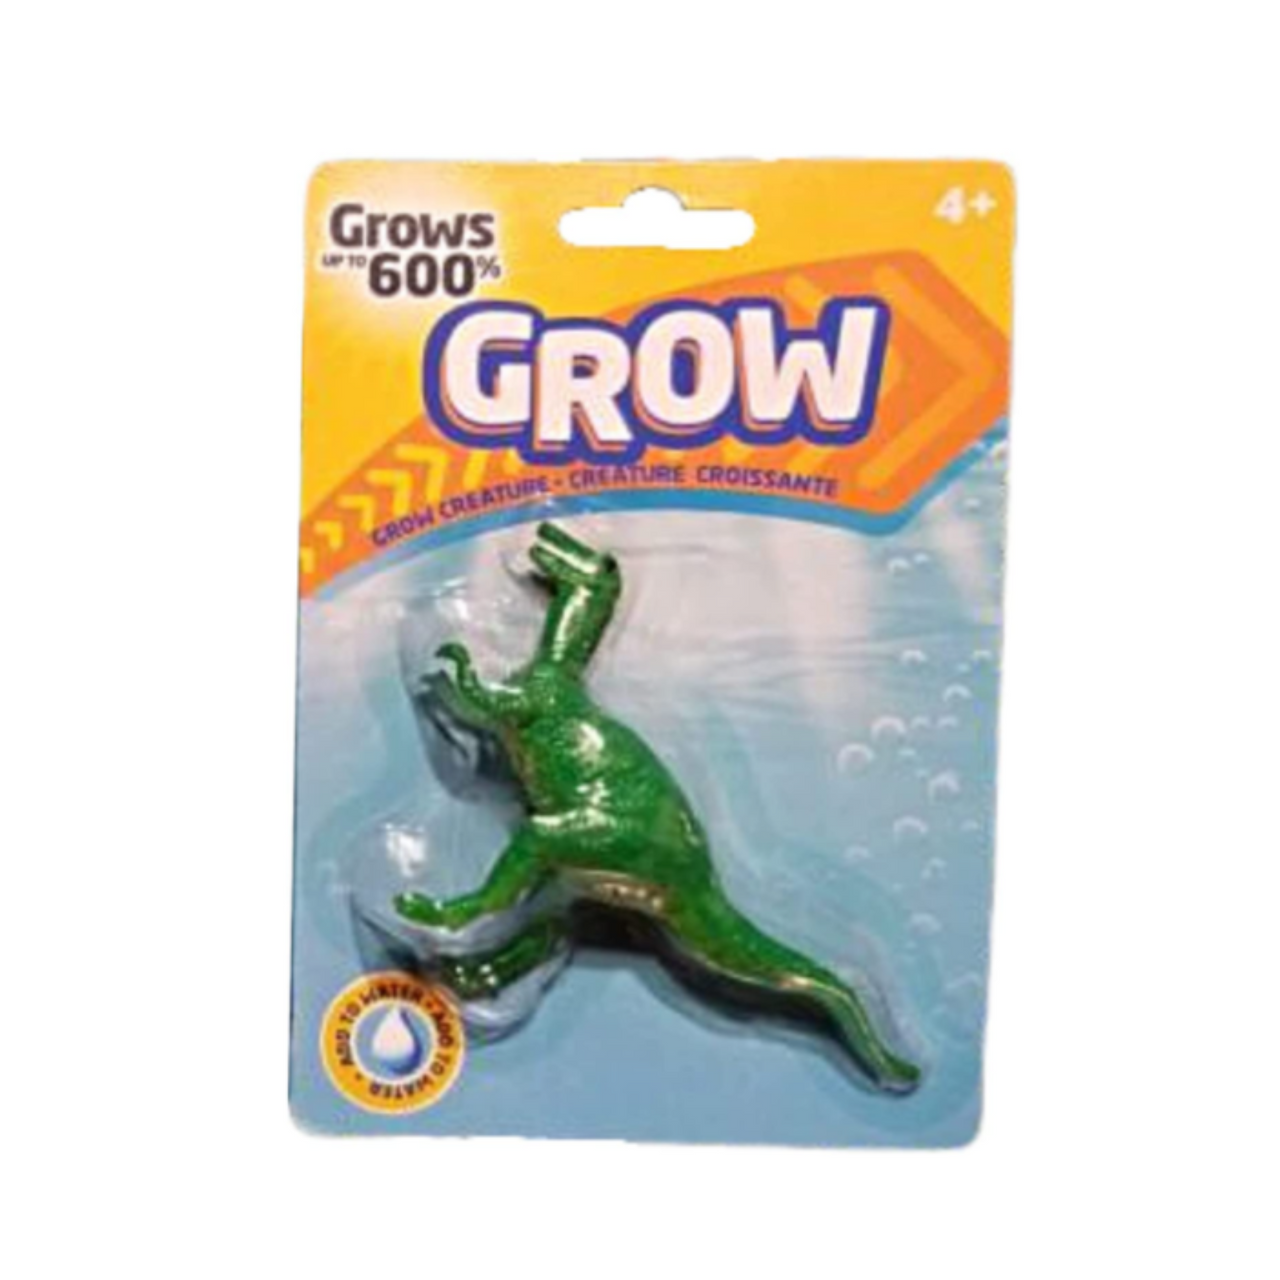 Grows 600% Larger Dinosaur in Water